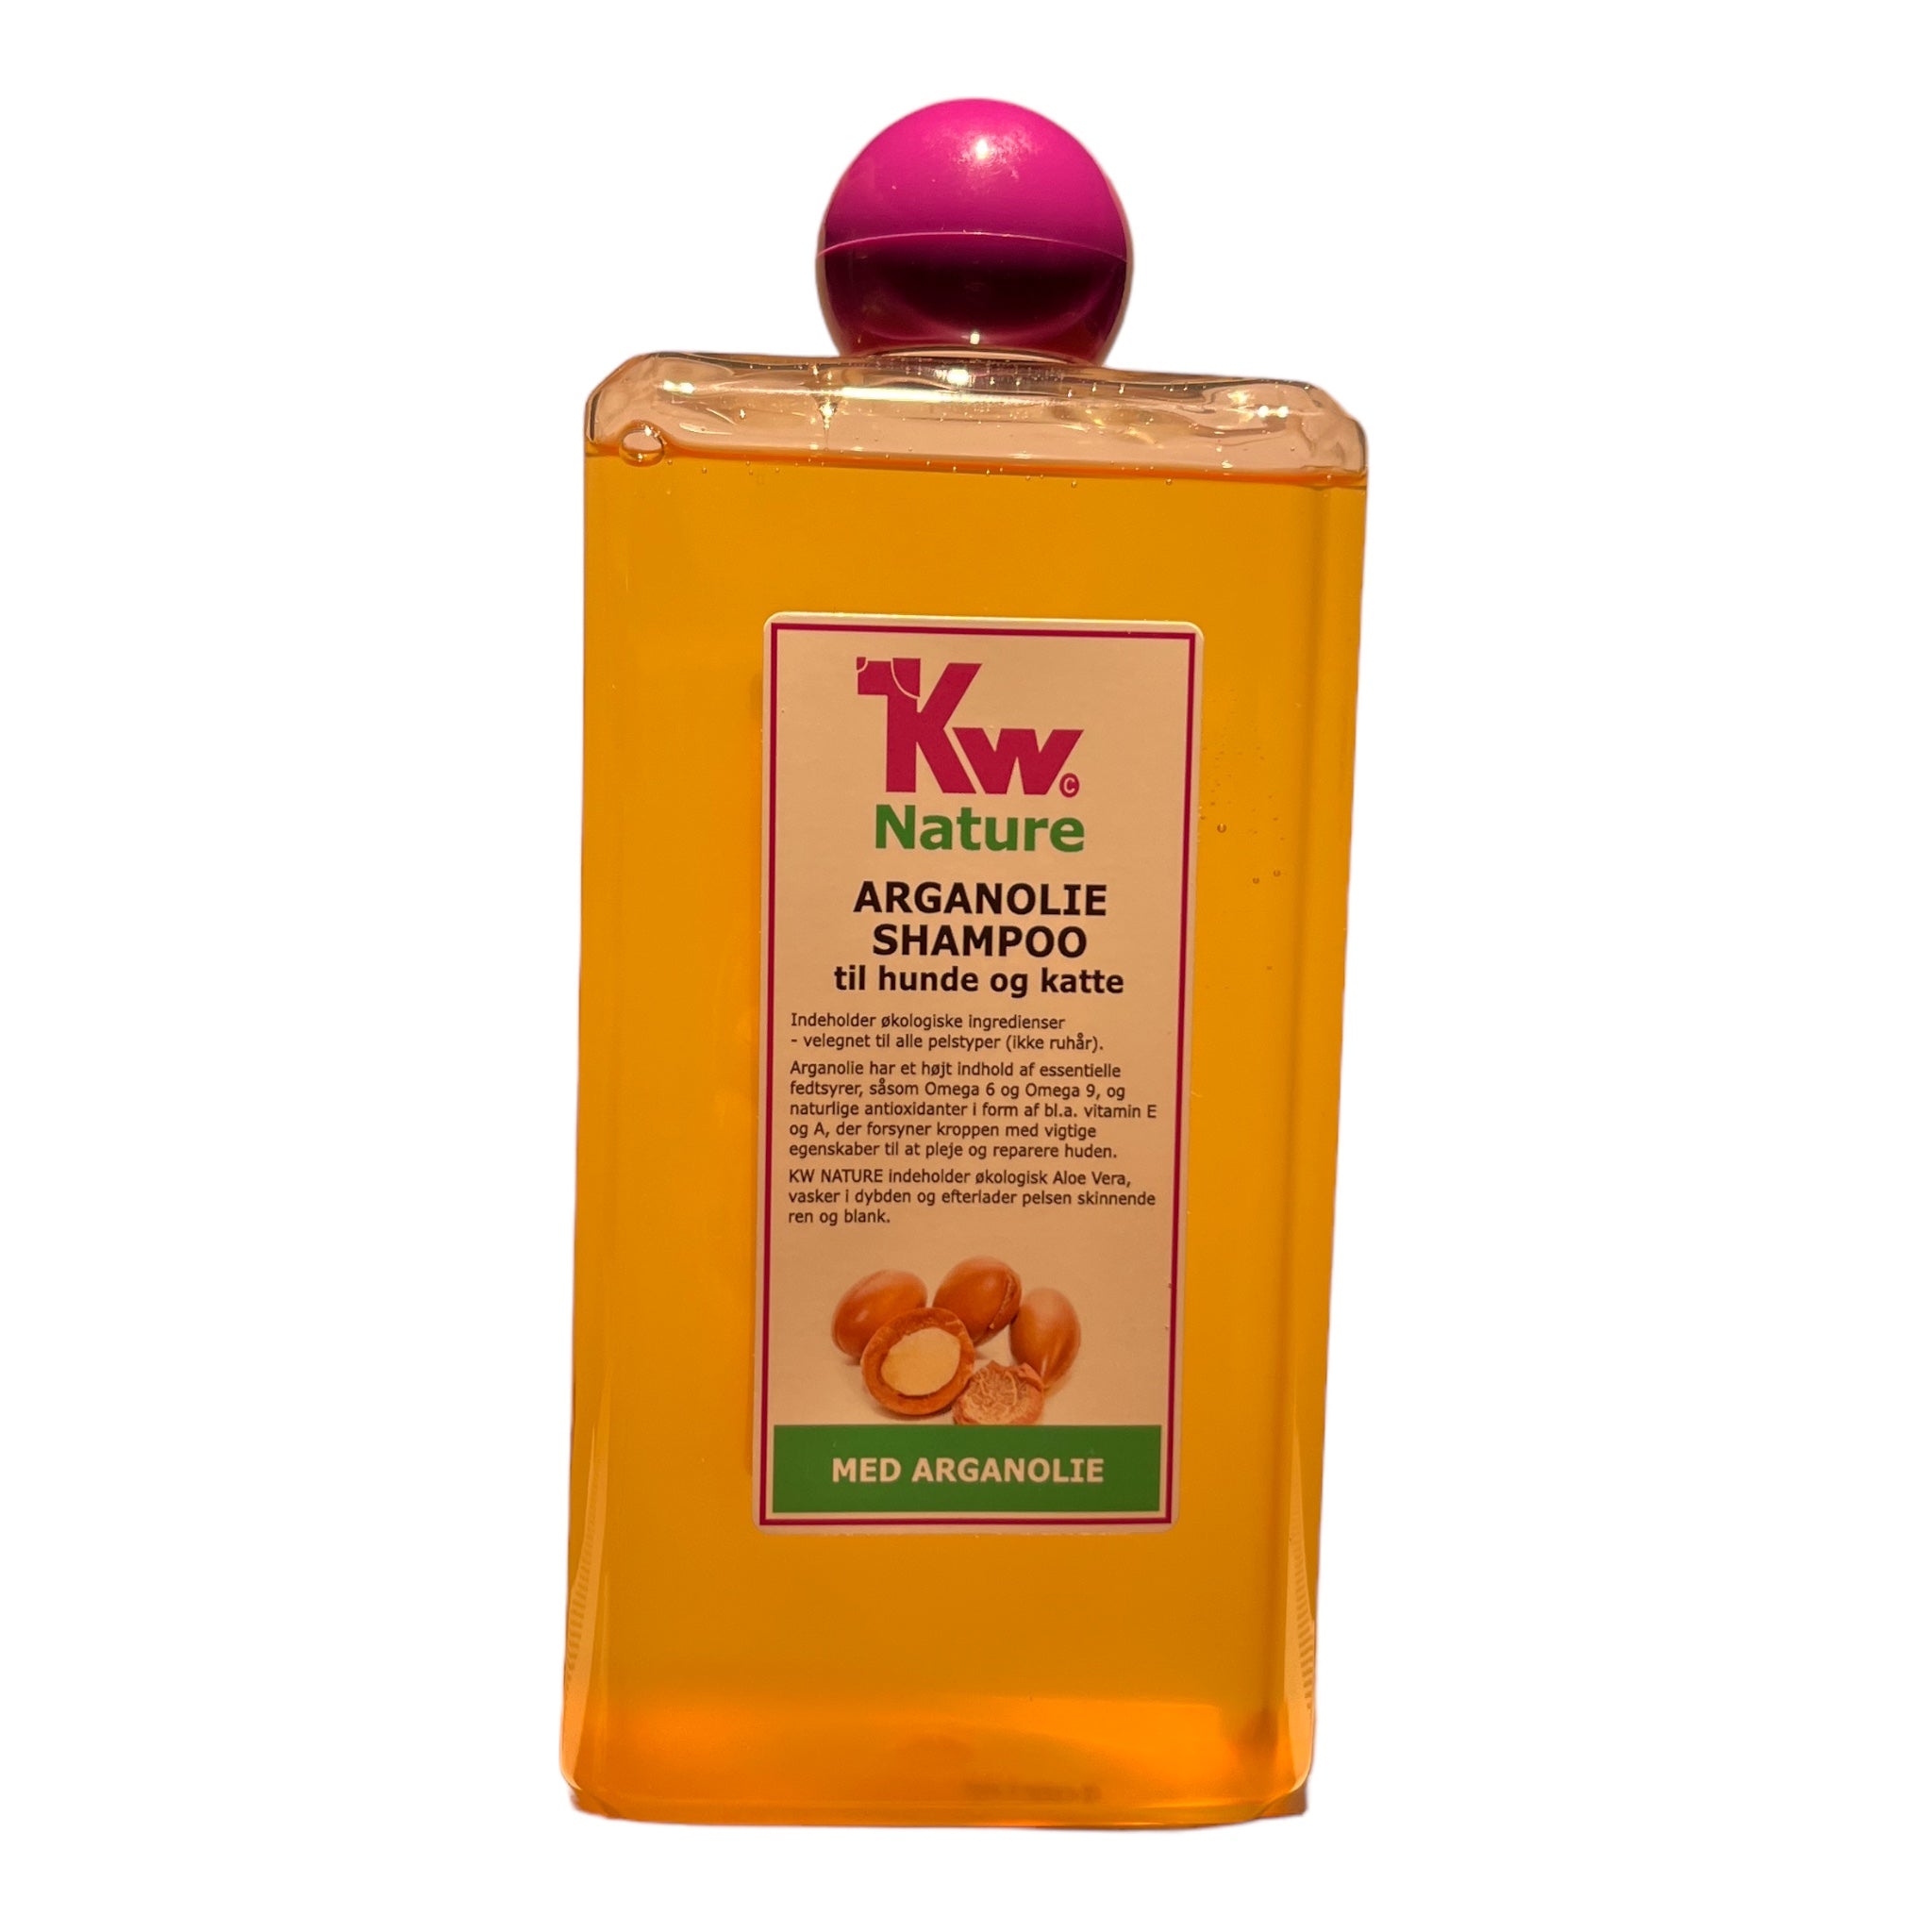 KW Nature Argan oil shampoo - 500ml